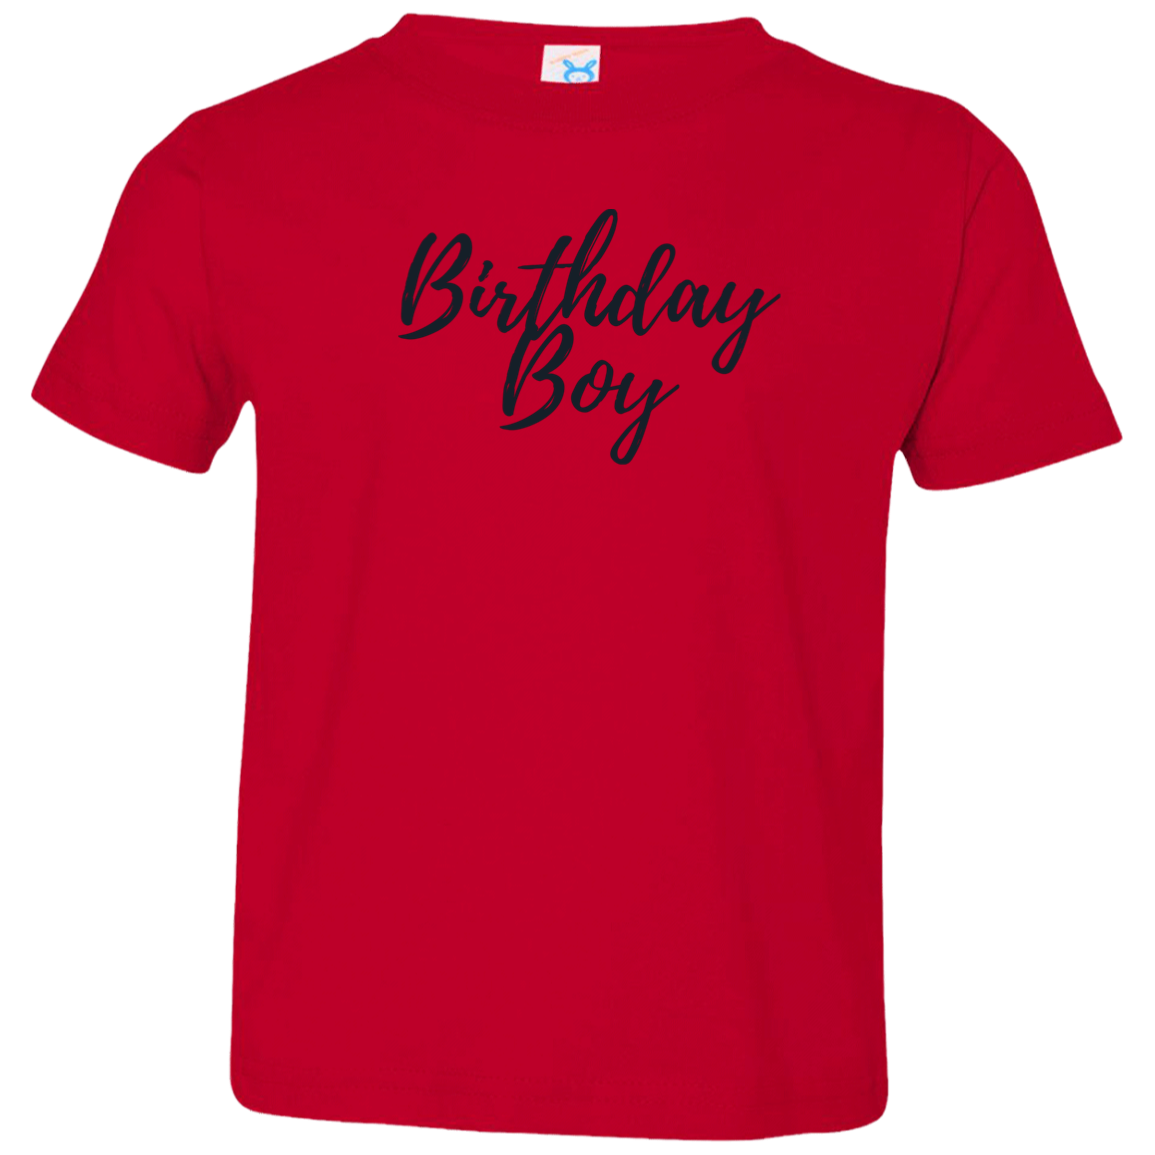 Birthday Boy (Black Print) 3321 Toddler Jersey T-Shirt